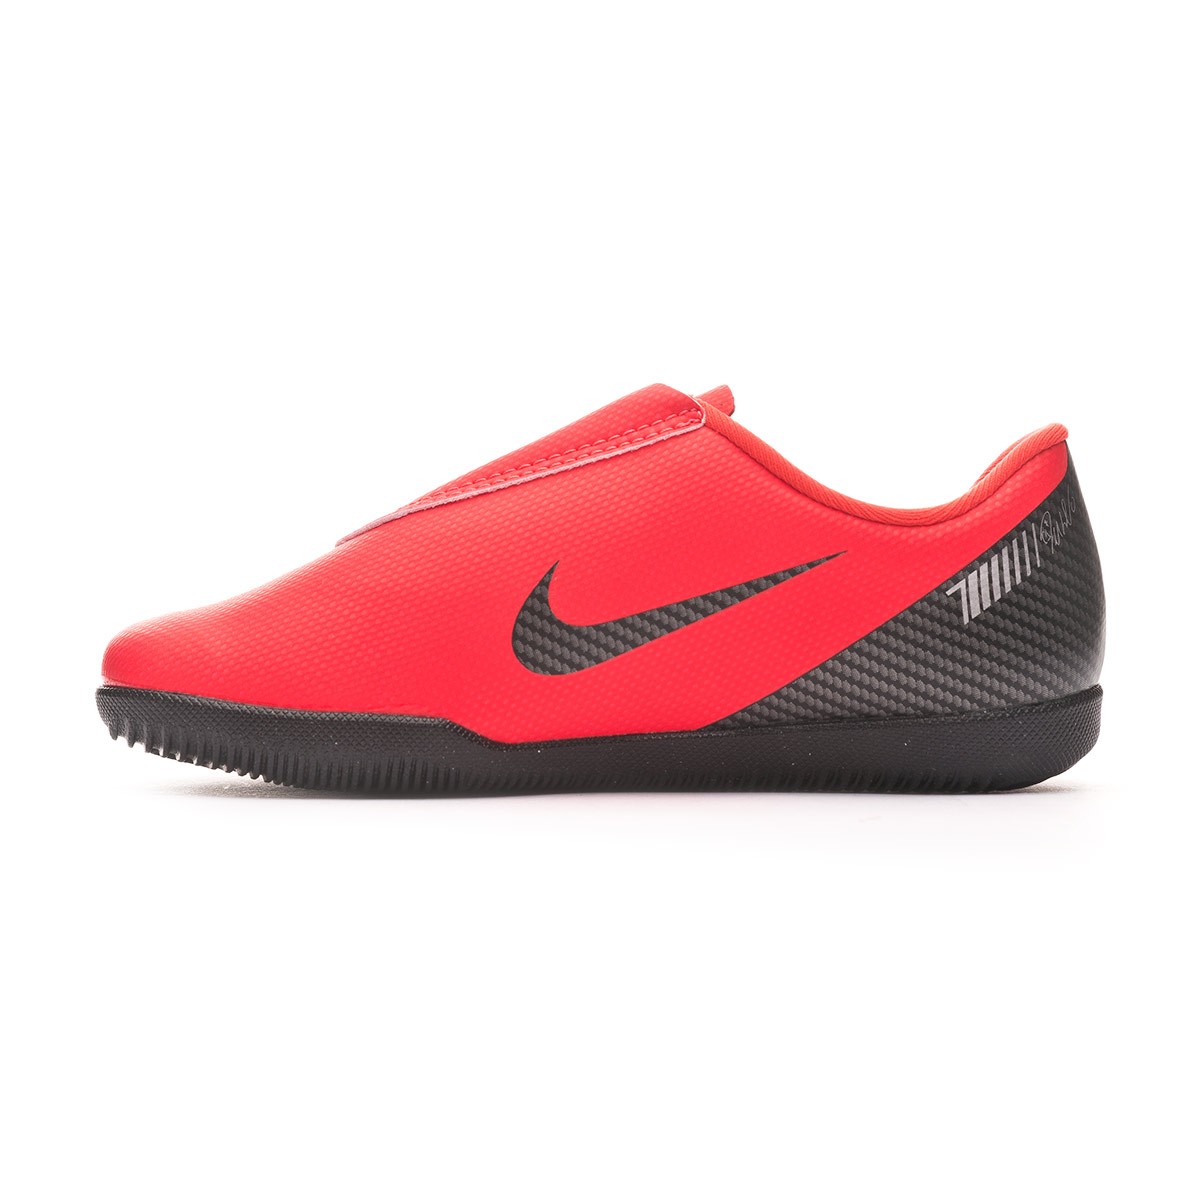 Nike Mercurial Vortex III CR7 FG Football Shoes . Amazon.in